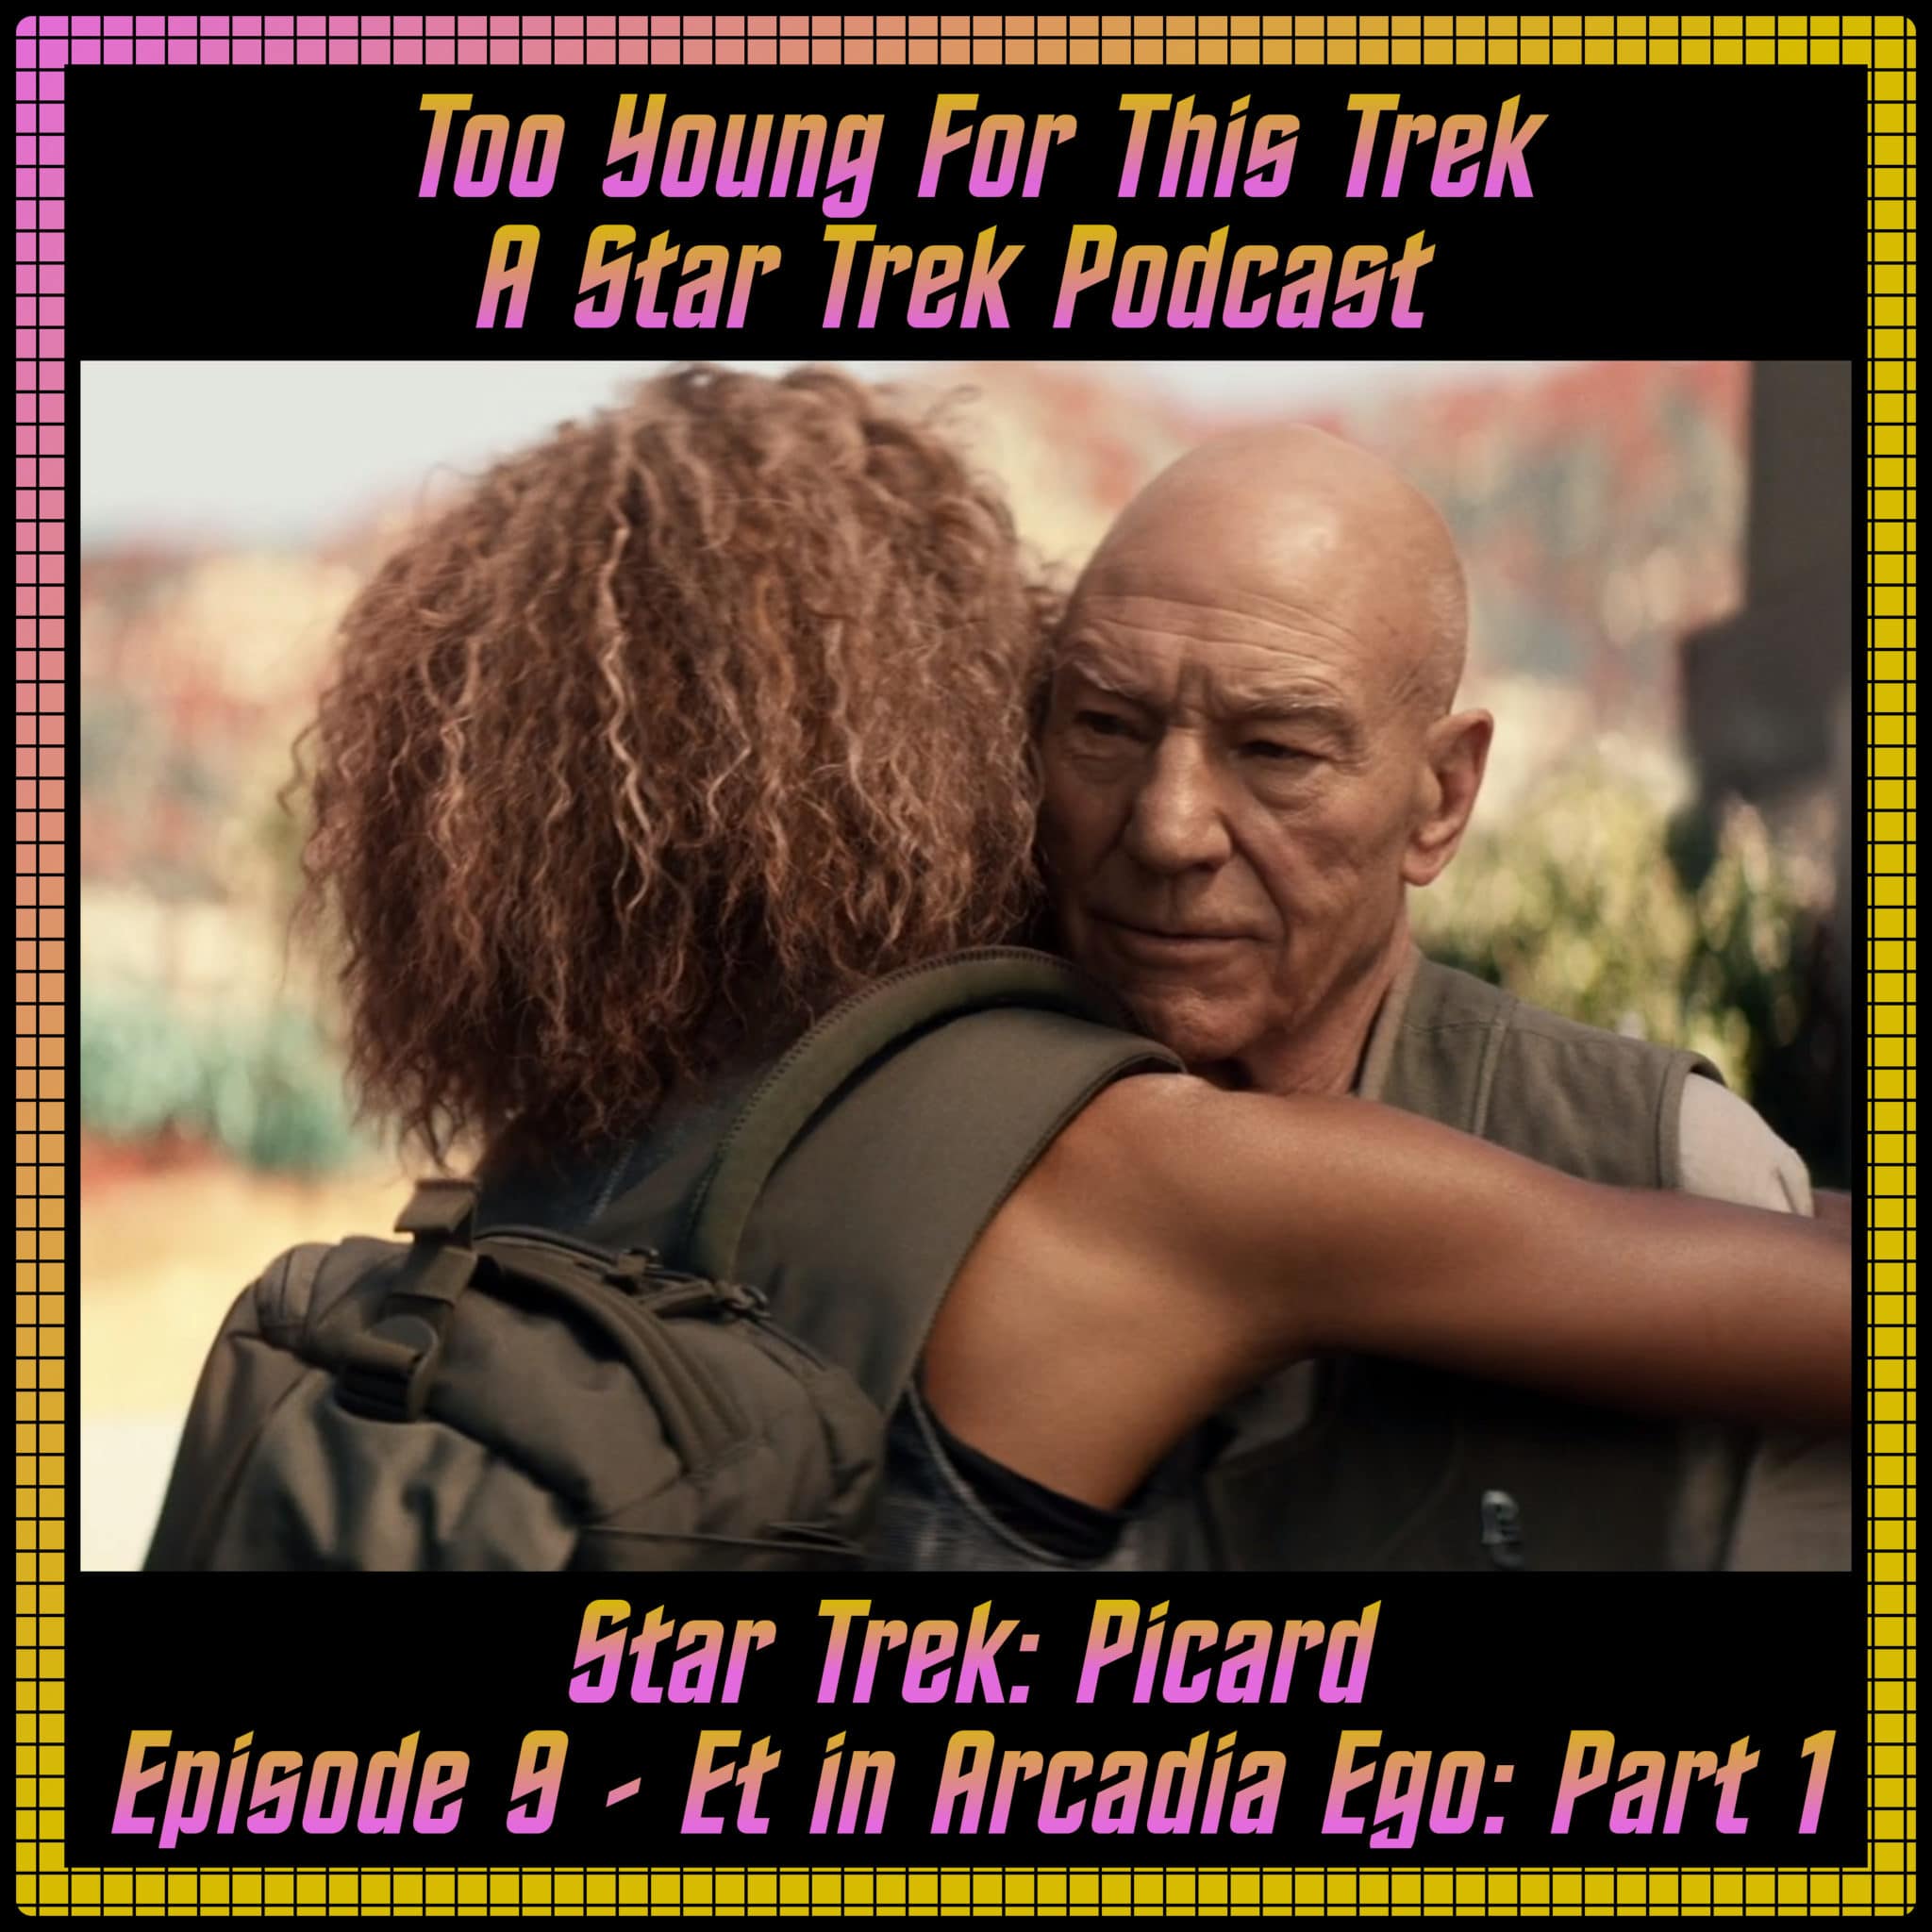 Star Trek: Picard Episode 9 - Et in Arcadia Ego: Part 1 - Recap